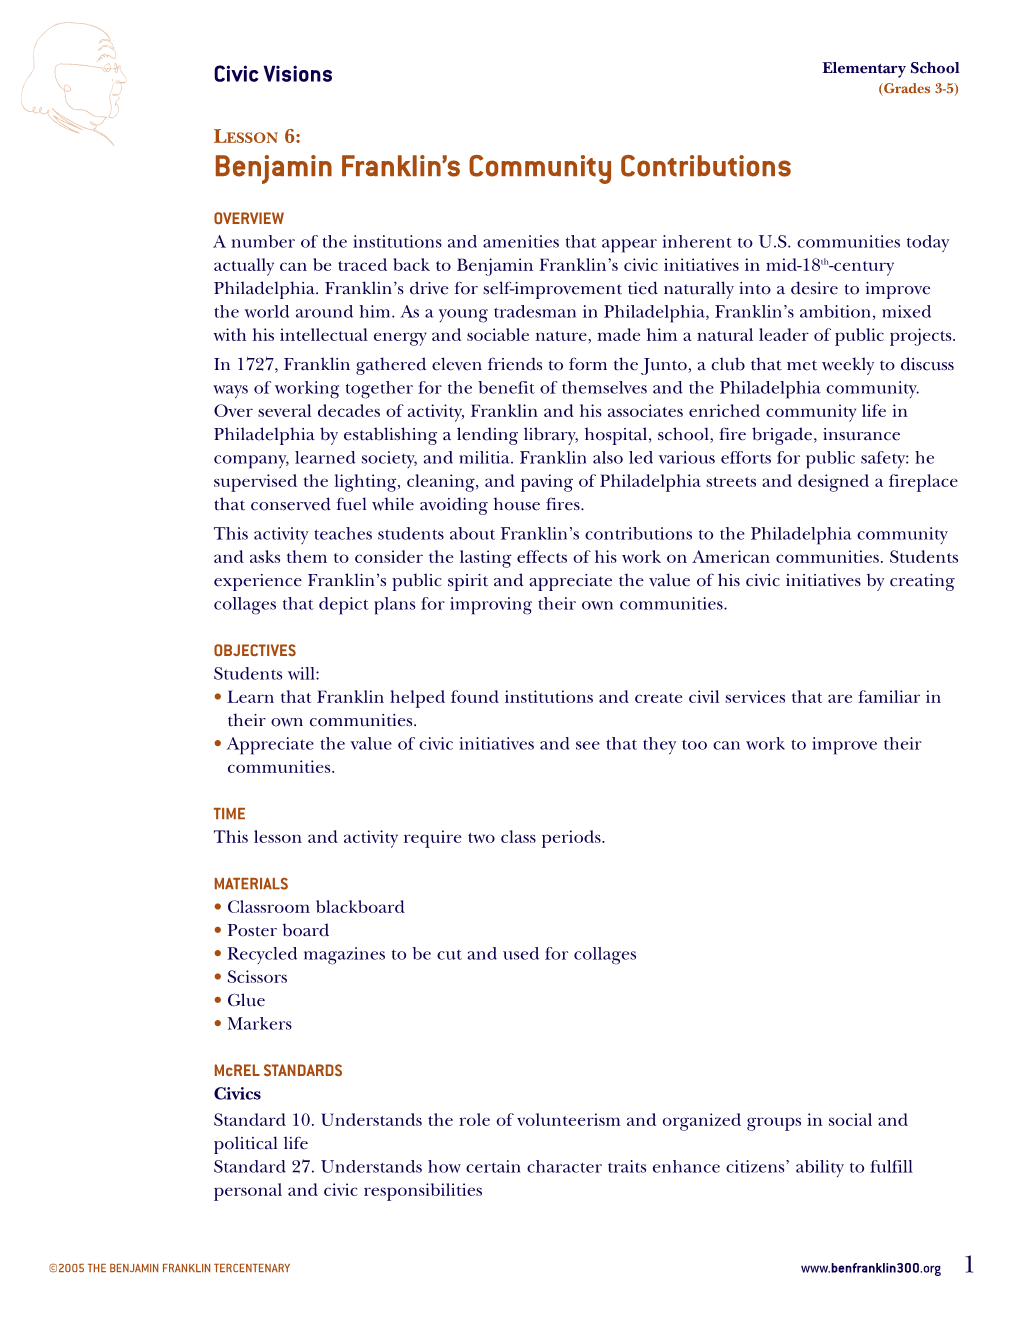 Benjamin Franklin's Community Contributions